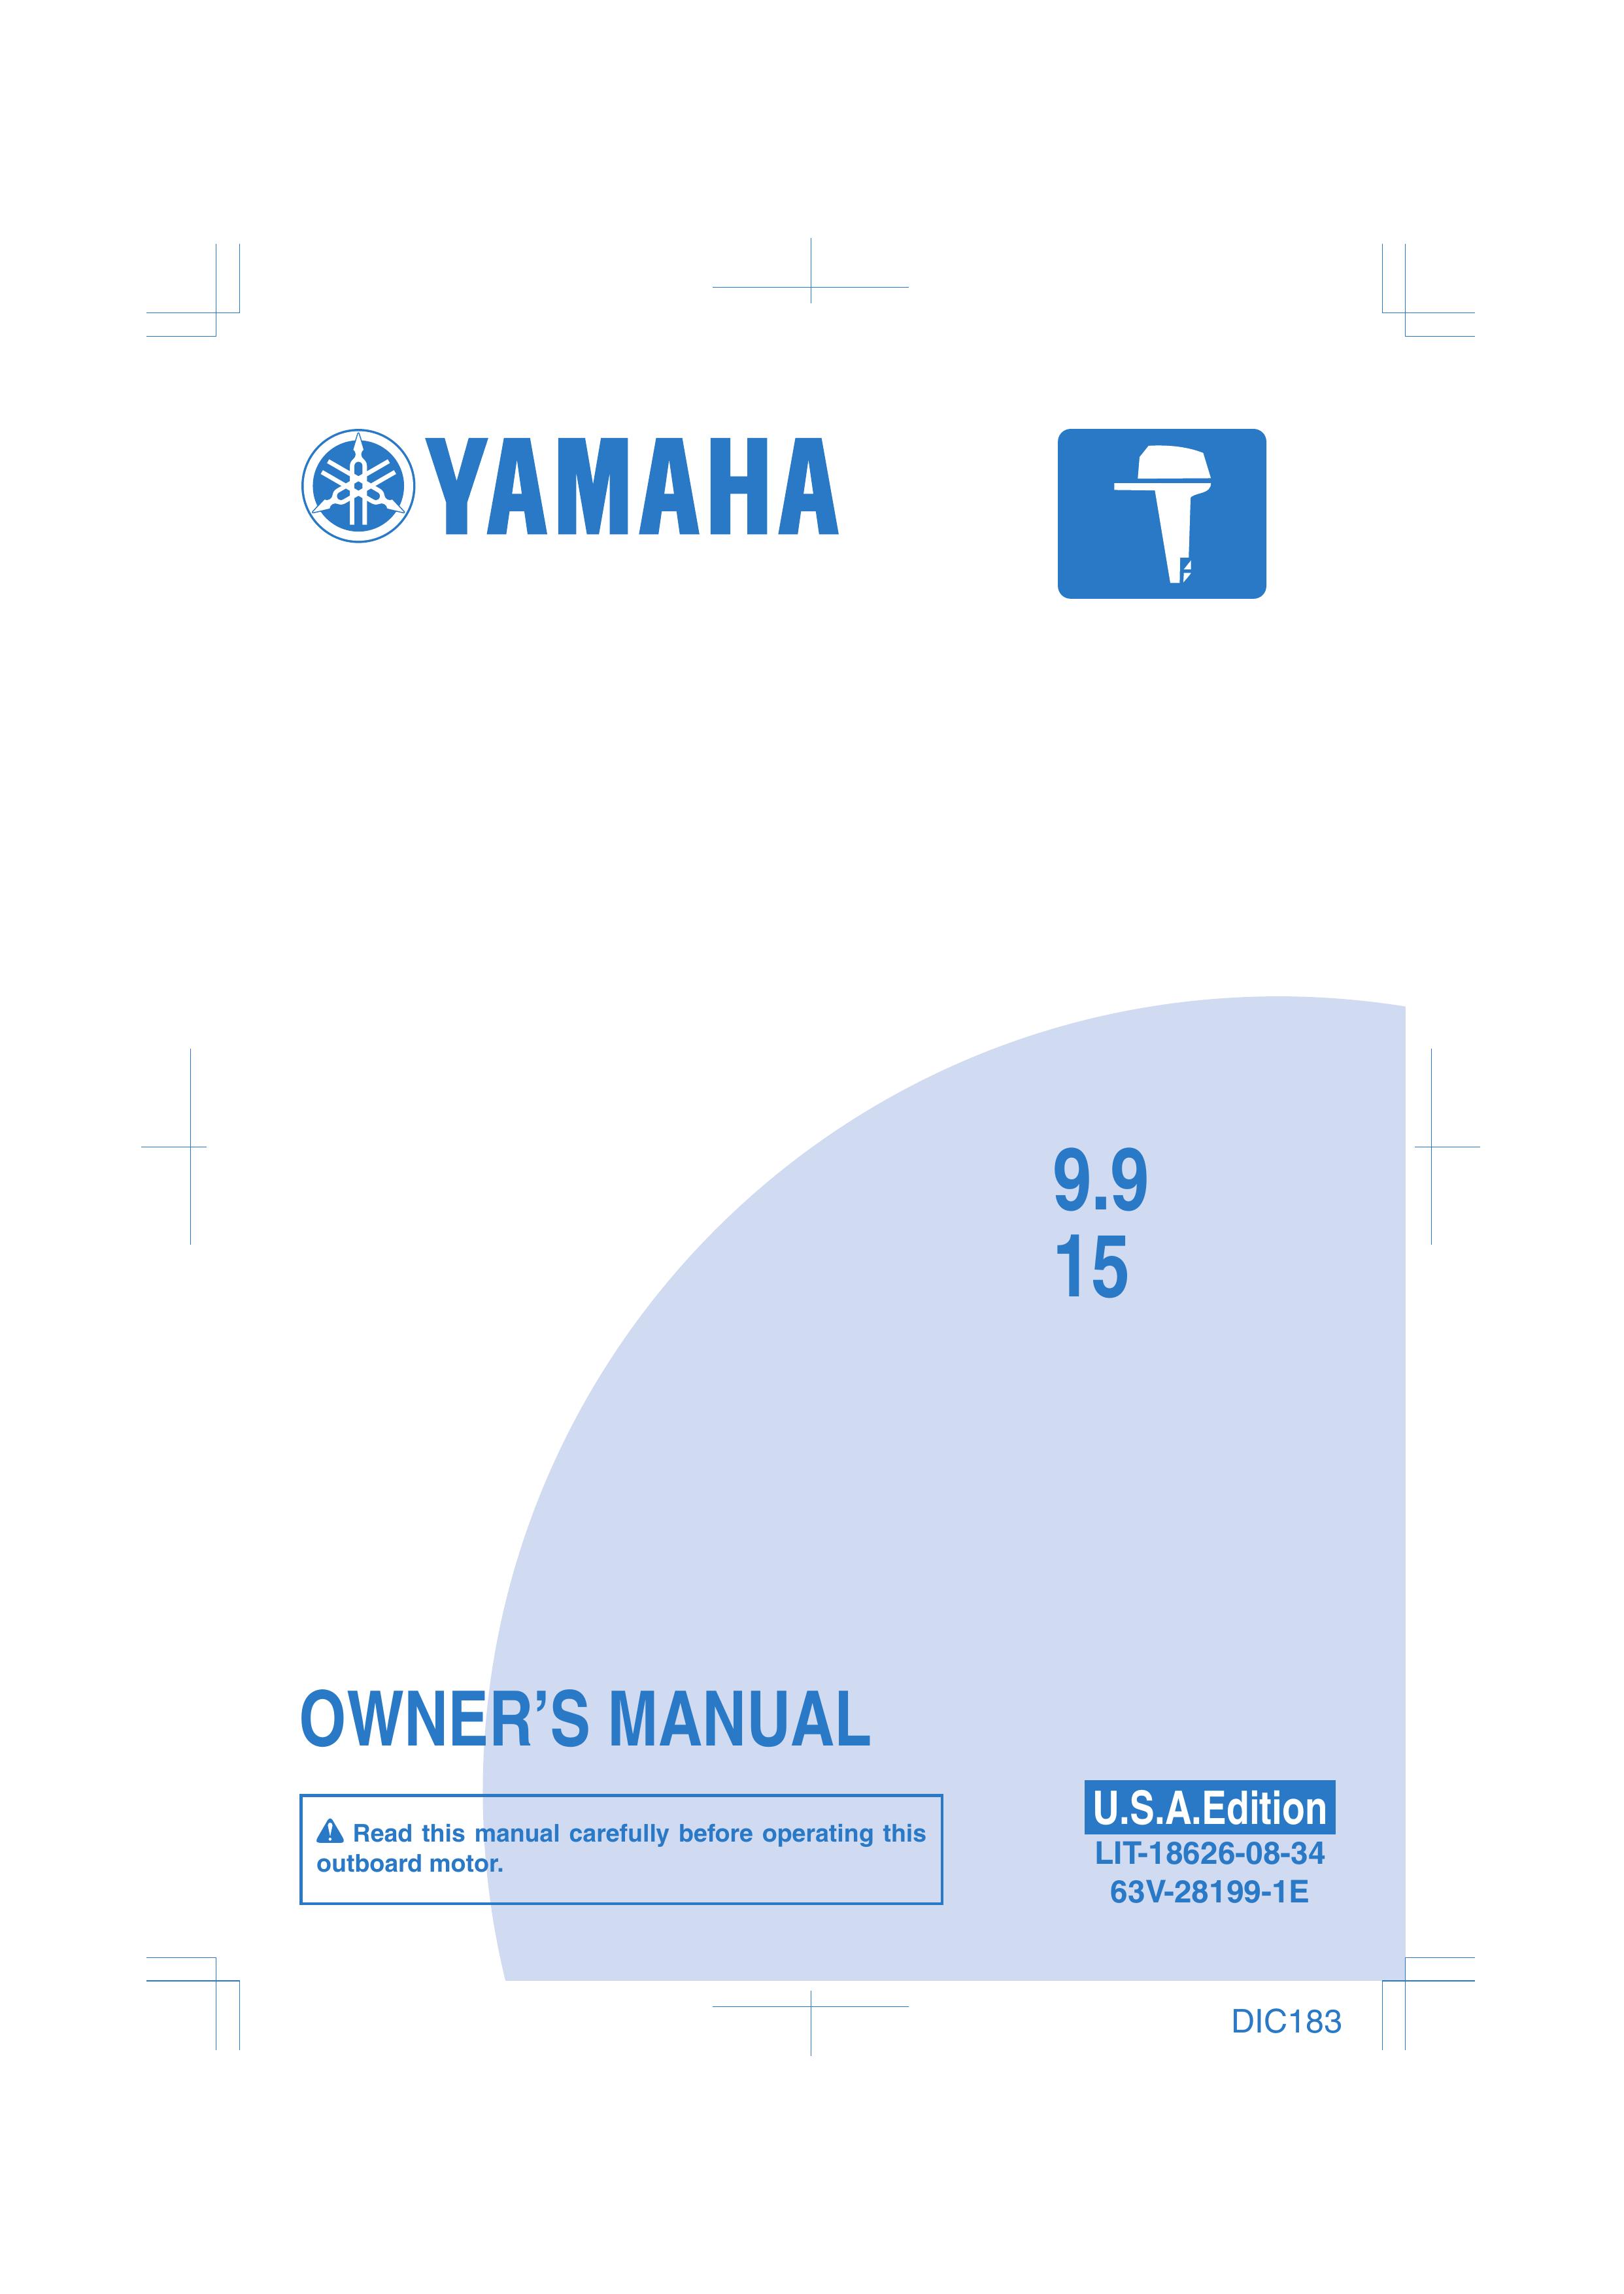 Yamaha 9.9 15 Outboard Motor User Manual